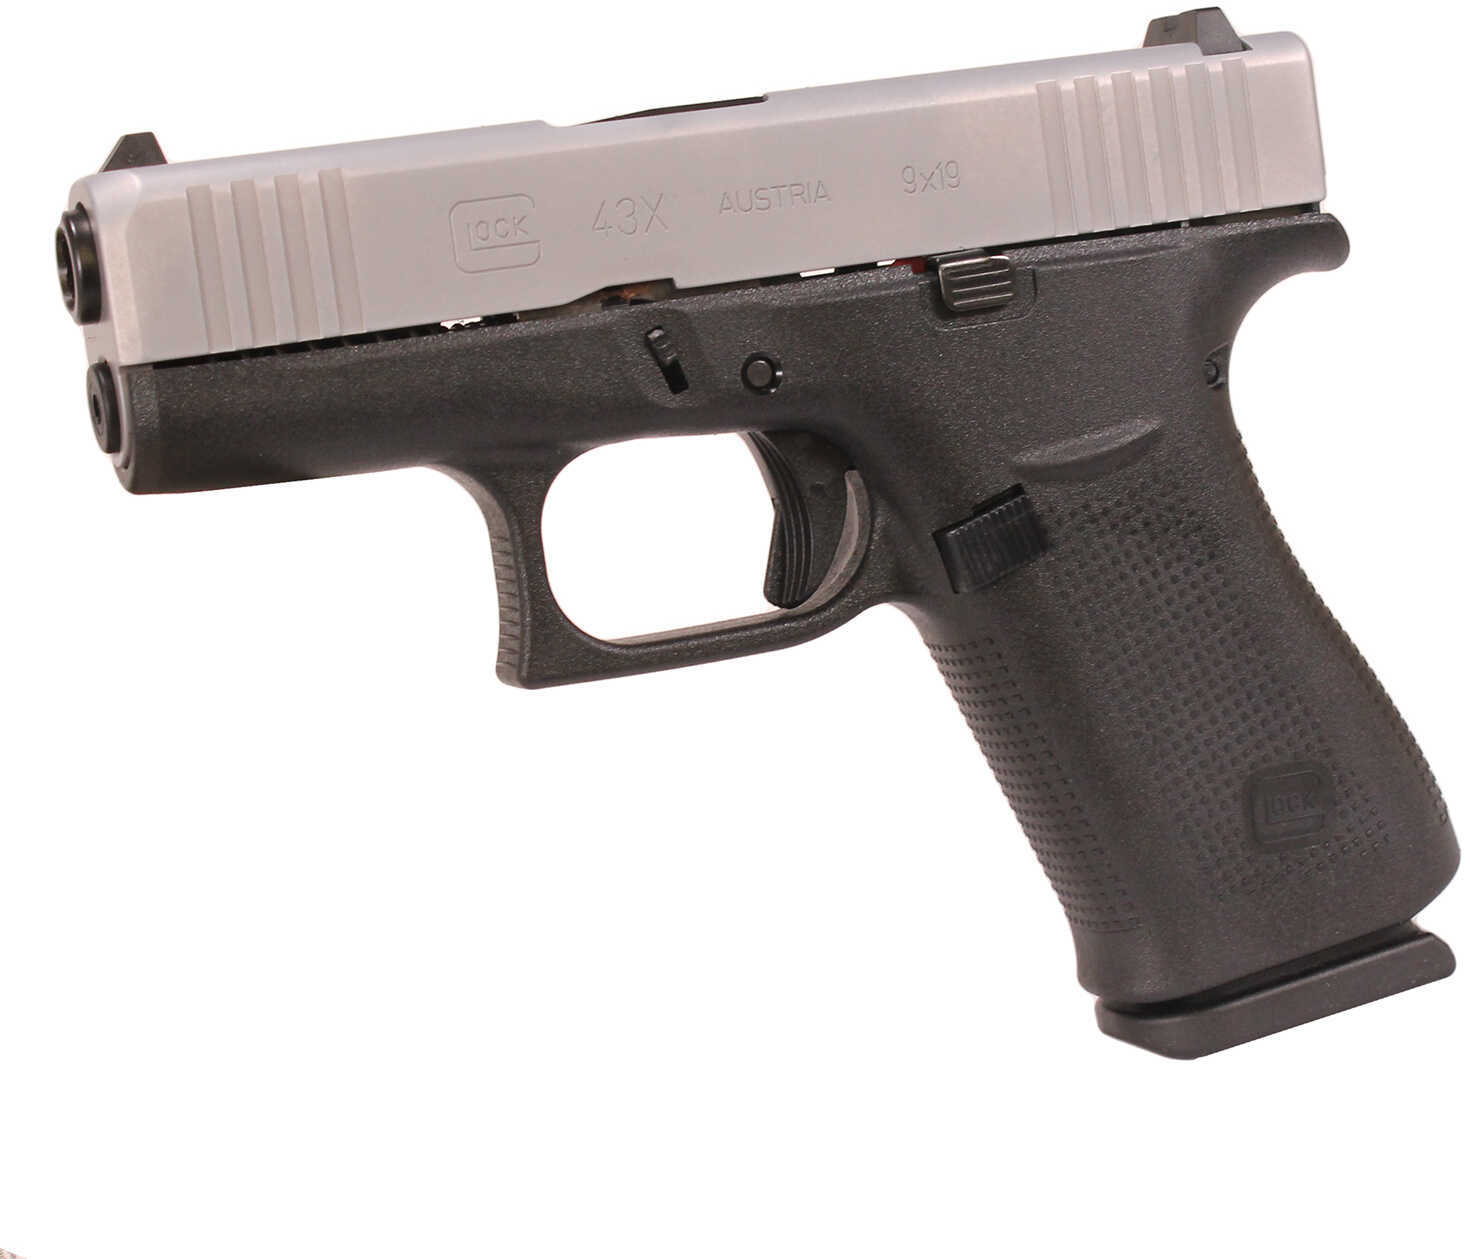 Glock 43x Subcompact Pistol 9mm G43x 10 Round Mag